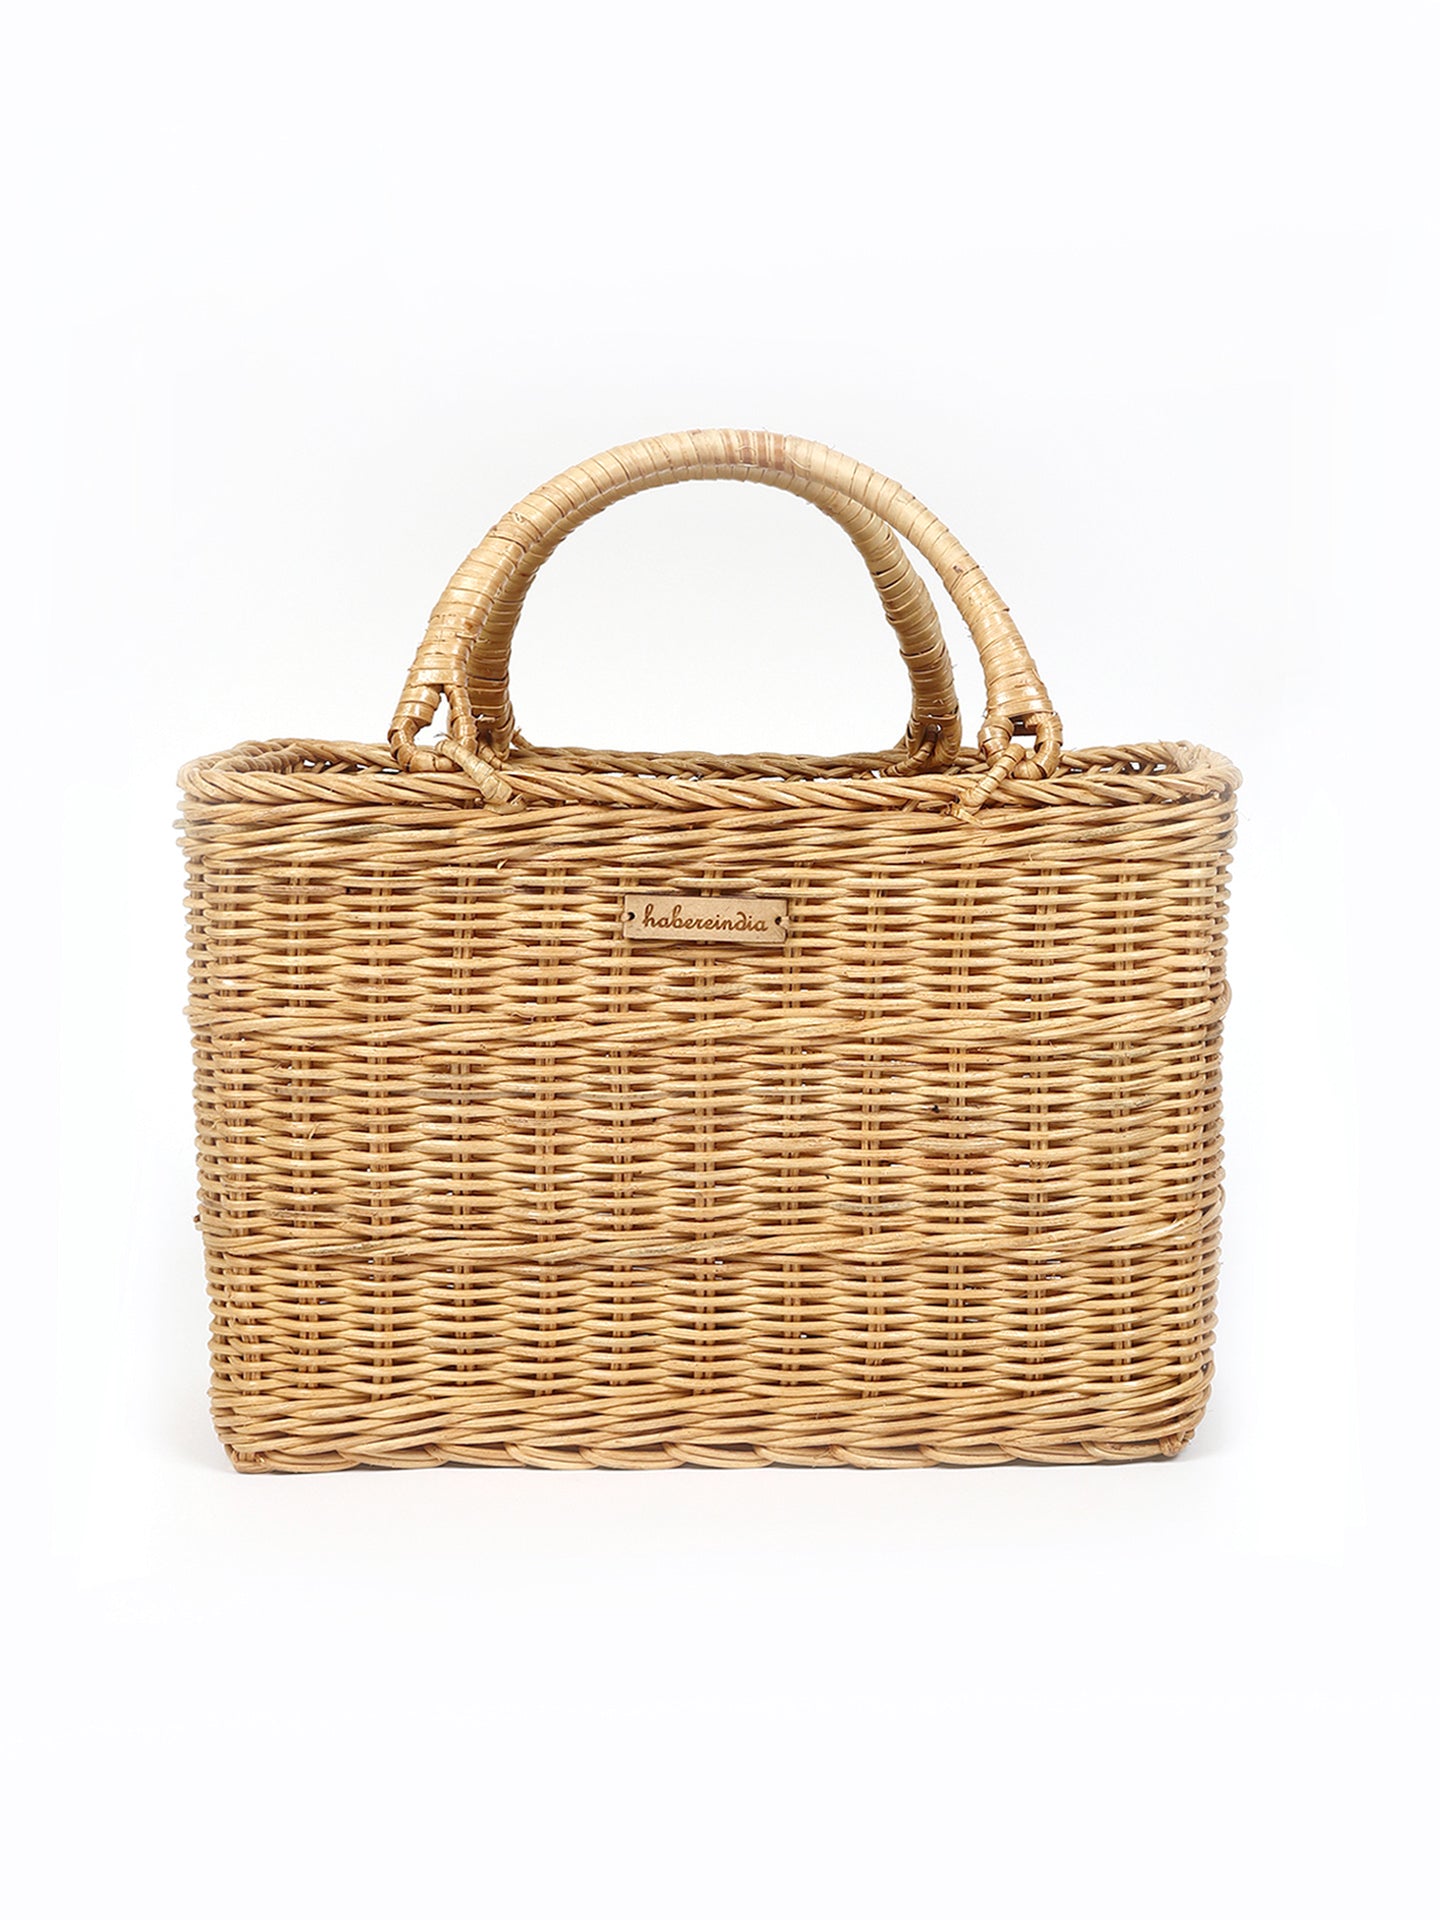 Buy Wicker Picnic Basket | Cane Shopping Basket |